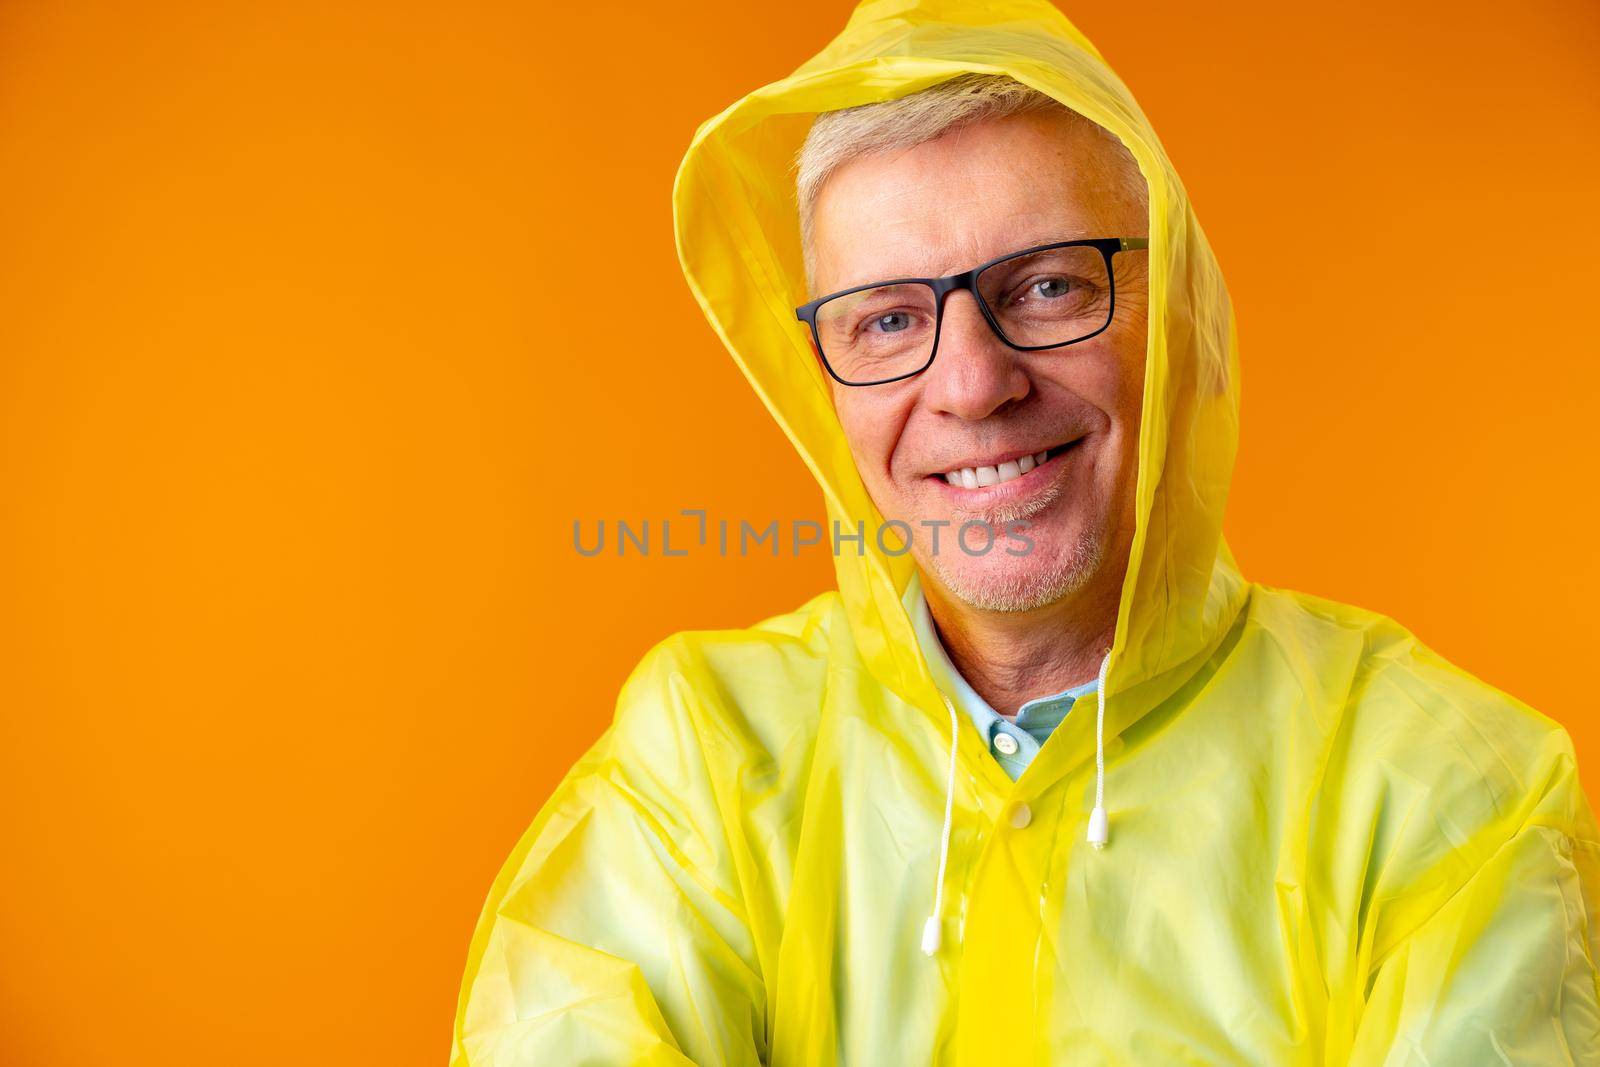 Mature man wearing raincoat over yellow background, portrait